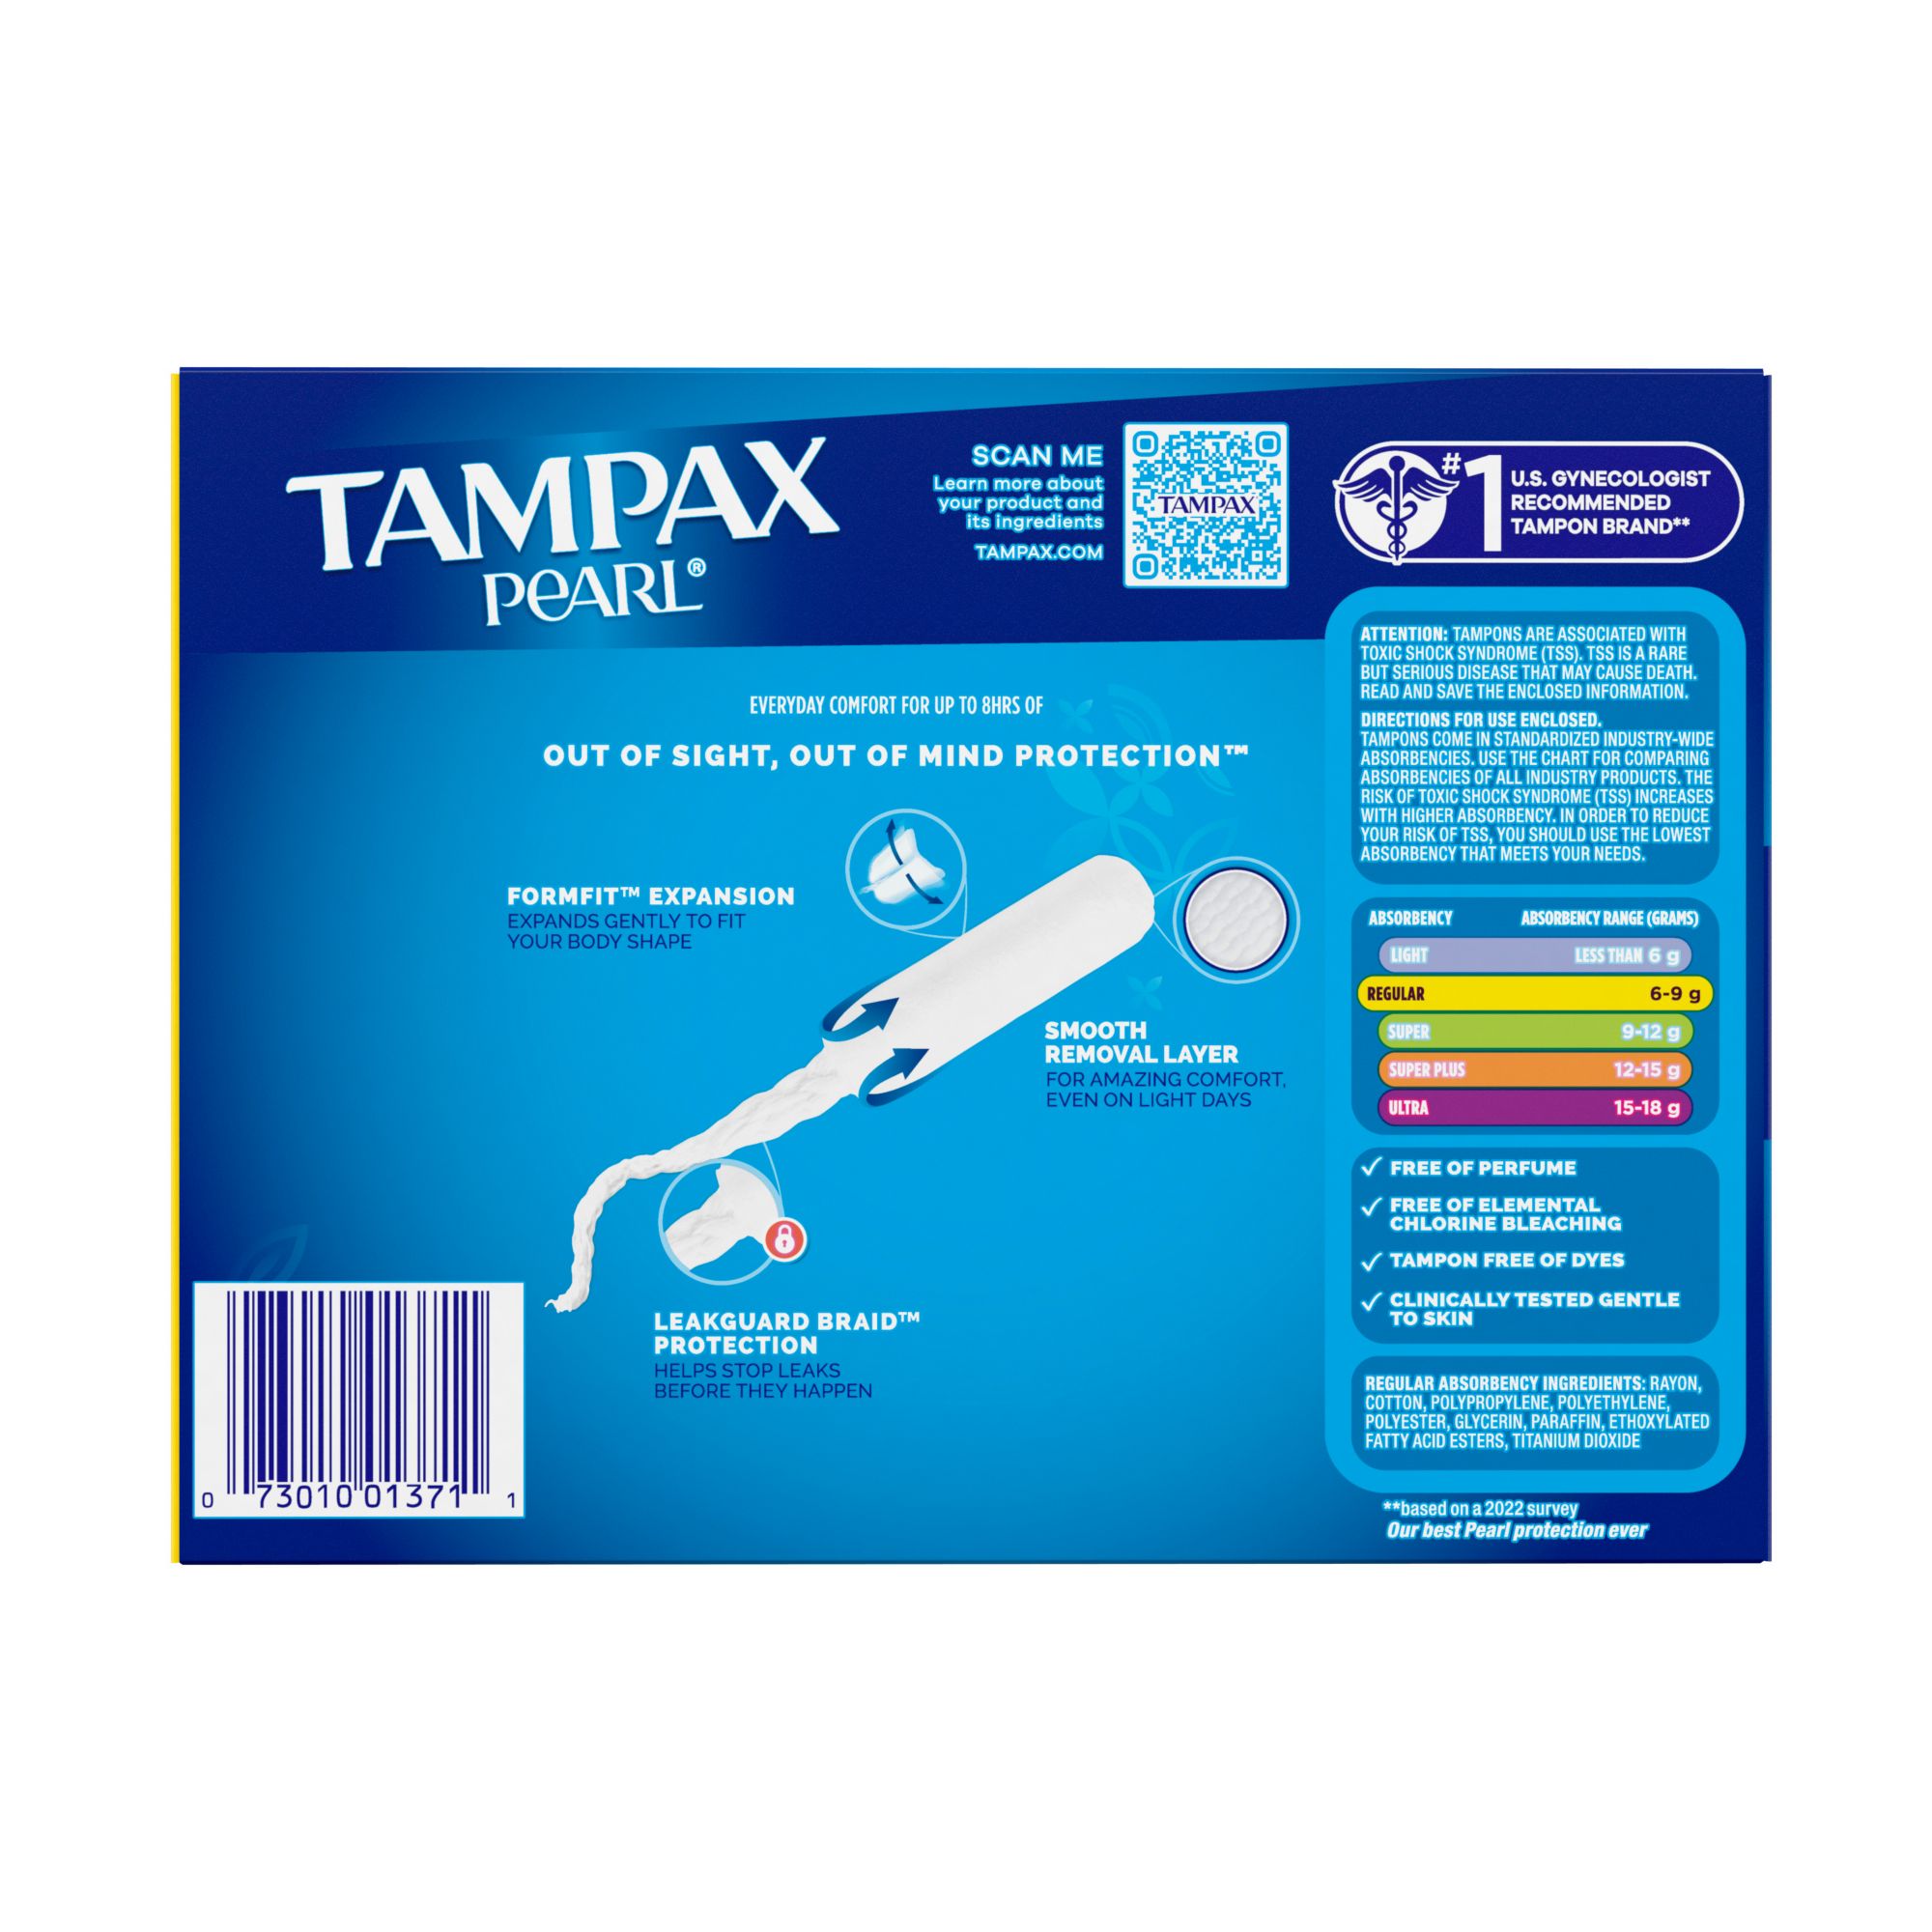 Tampax Pearl Regular Unscented Tampons, 96 ct.